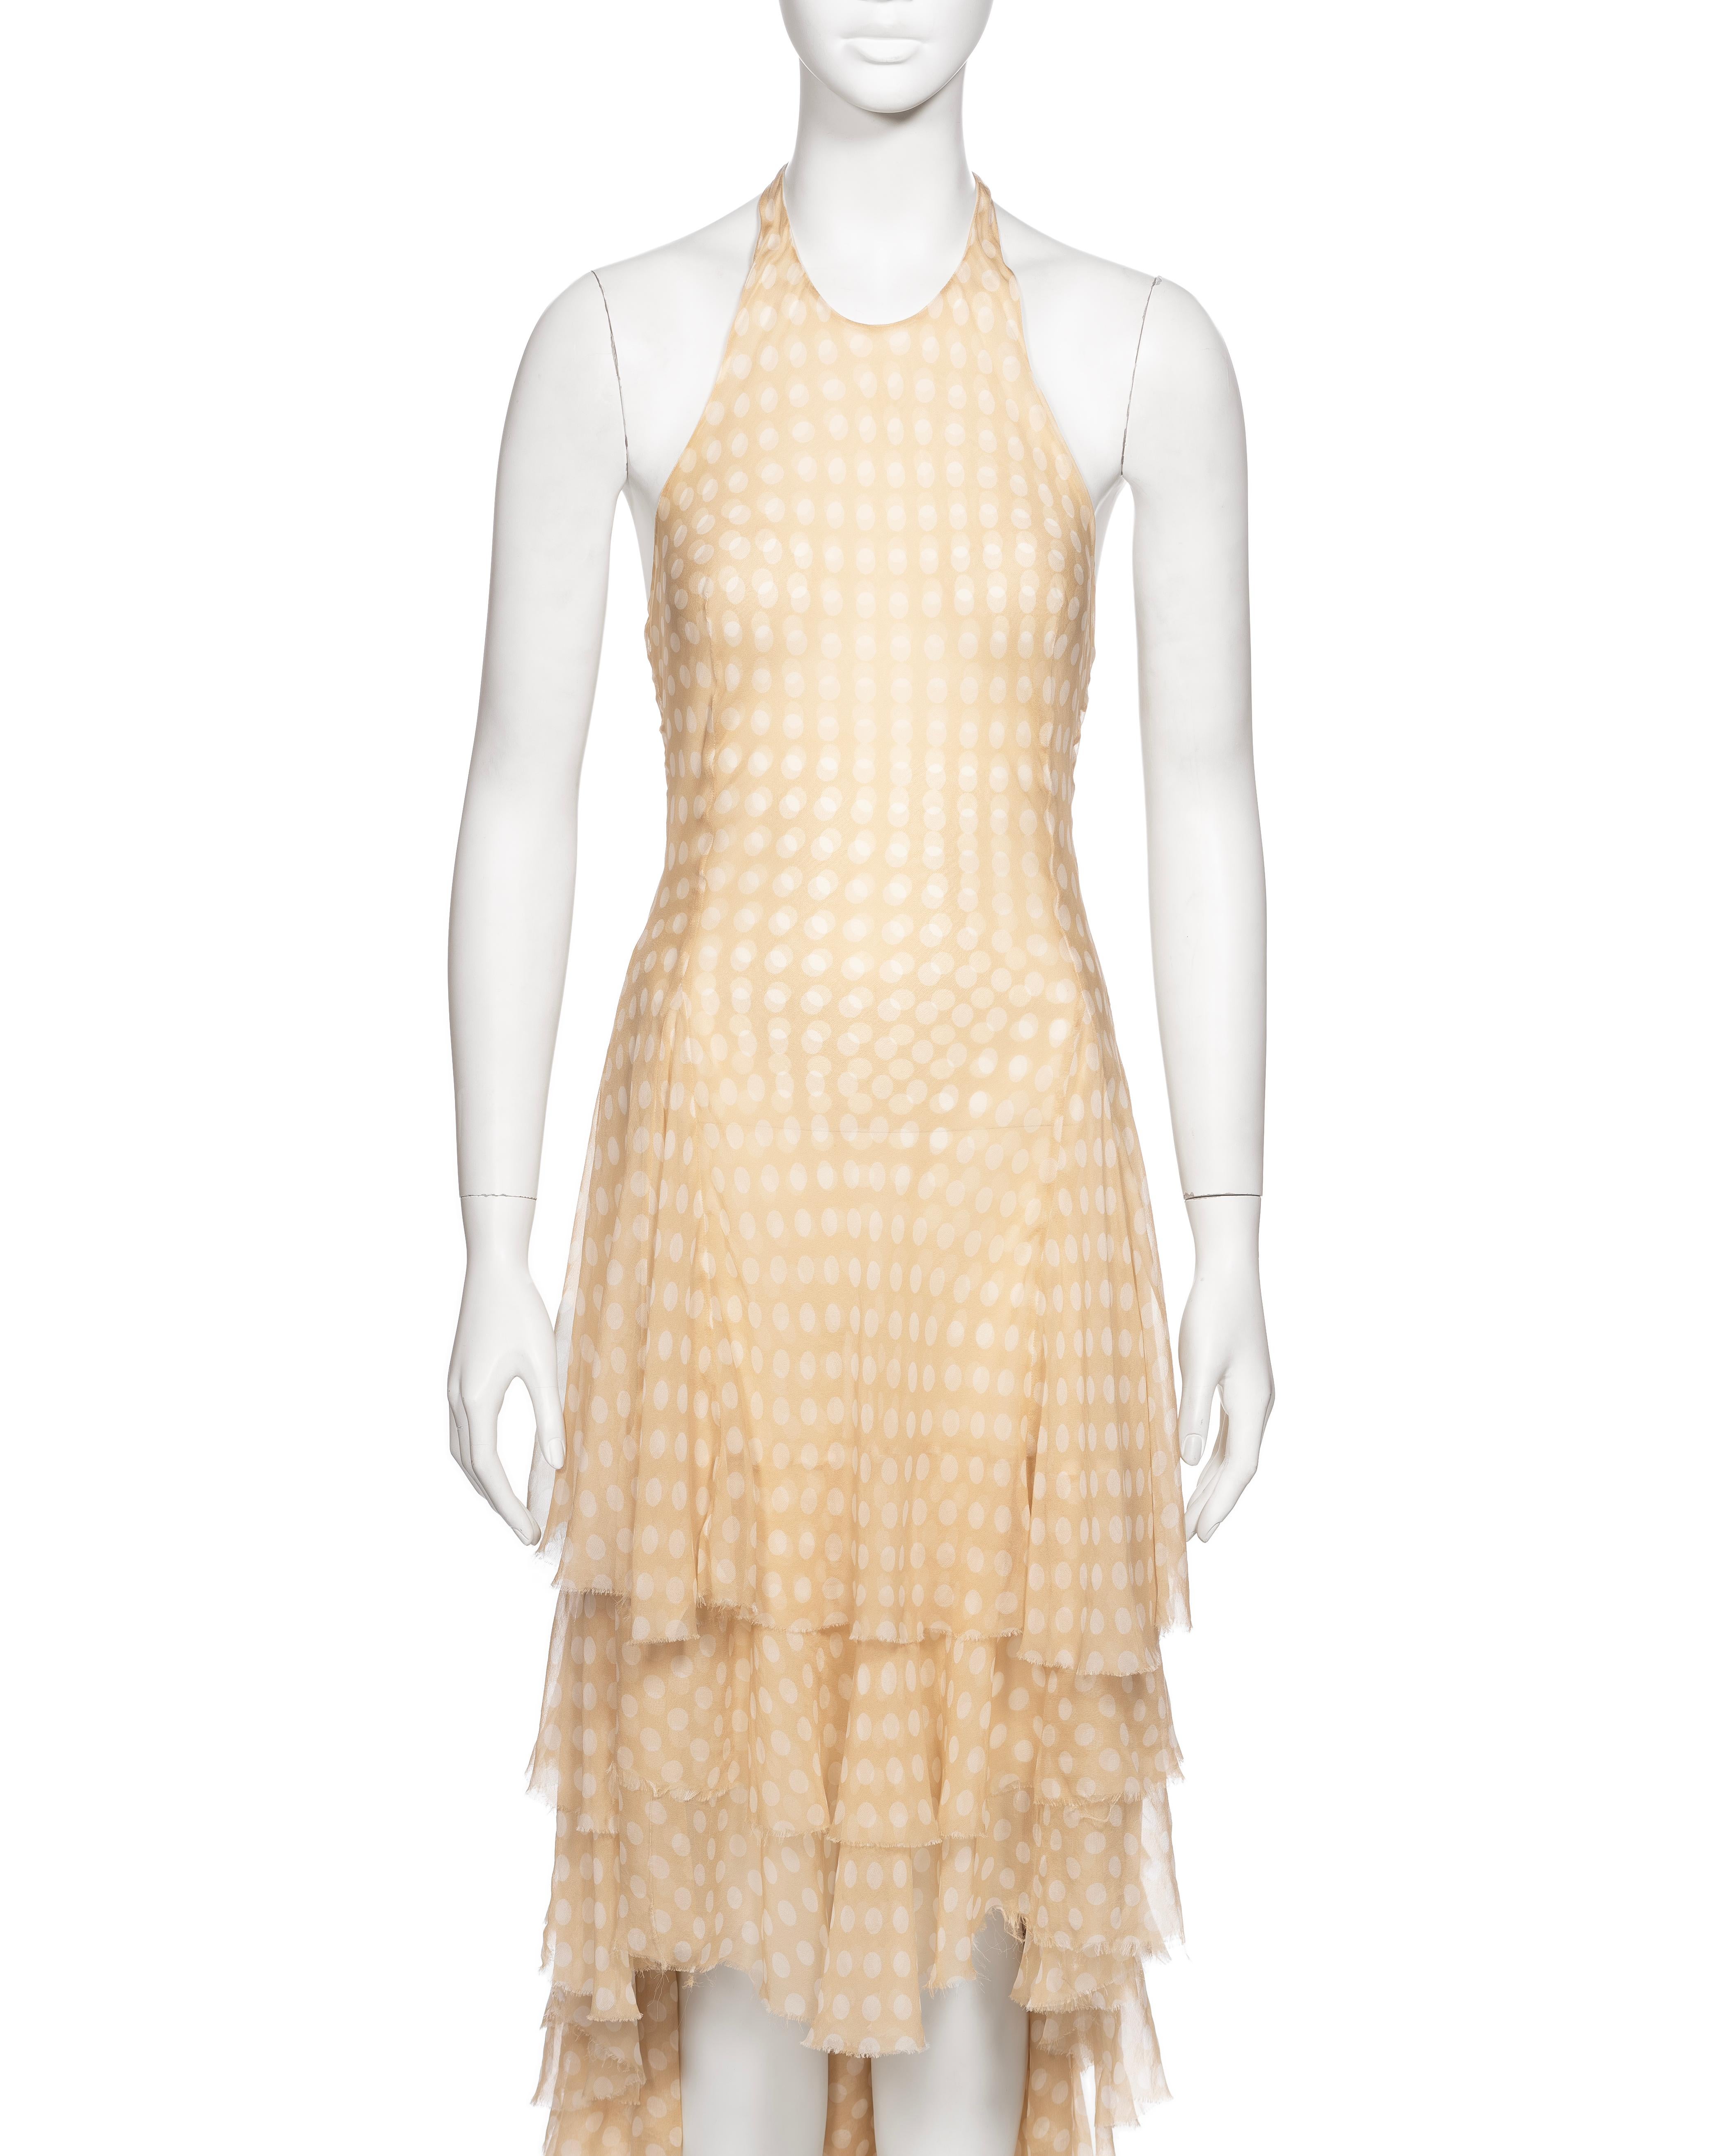 Alexander McQueen Cream Polka Dot Silk Chiffon Halter Neck Dress, SS 2002 In Good Condition For Sale In London, GB